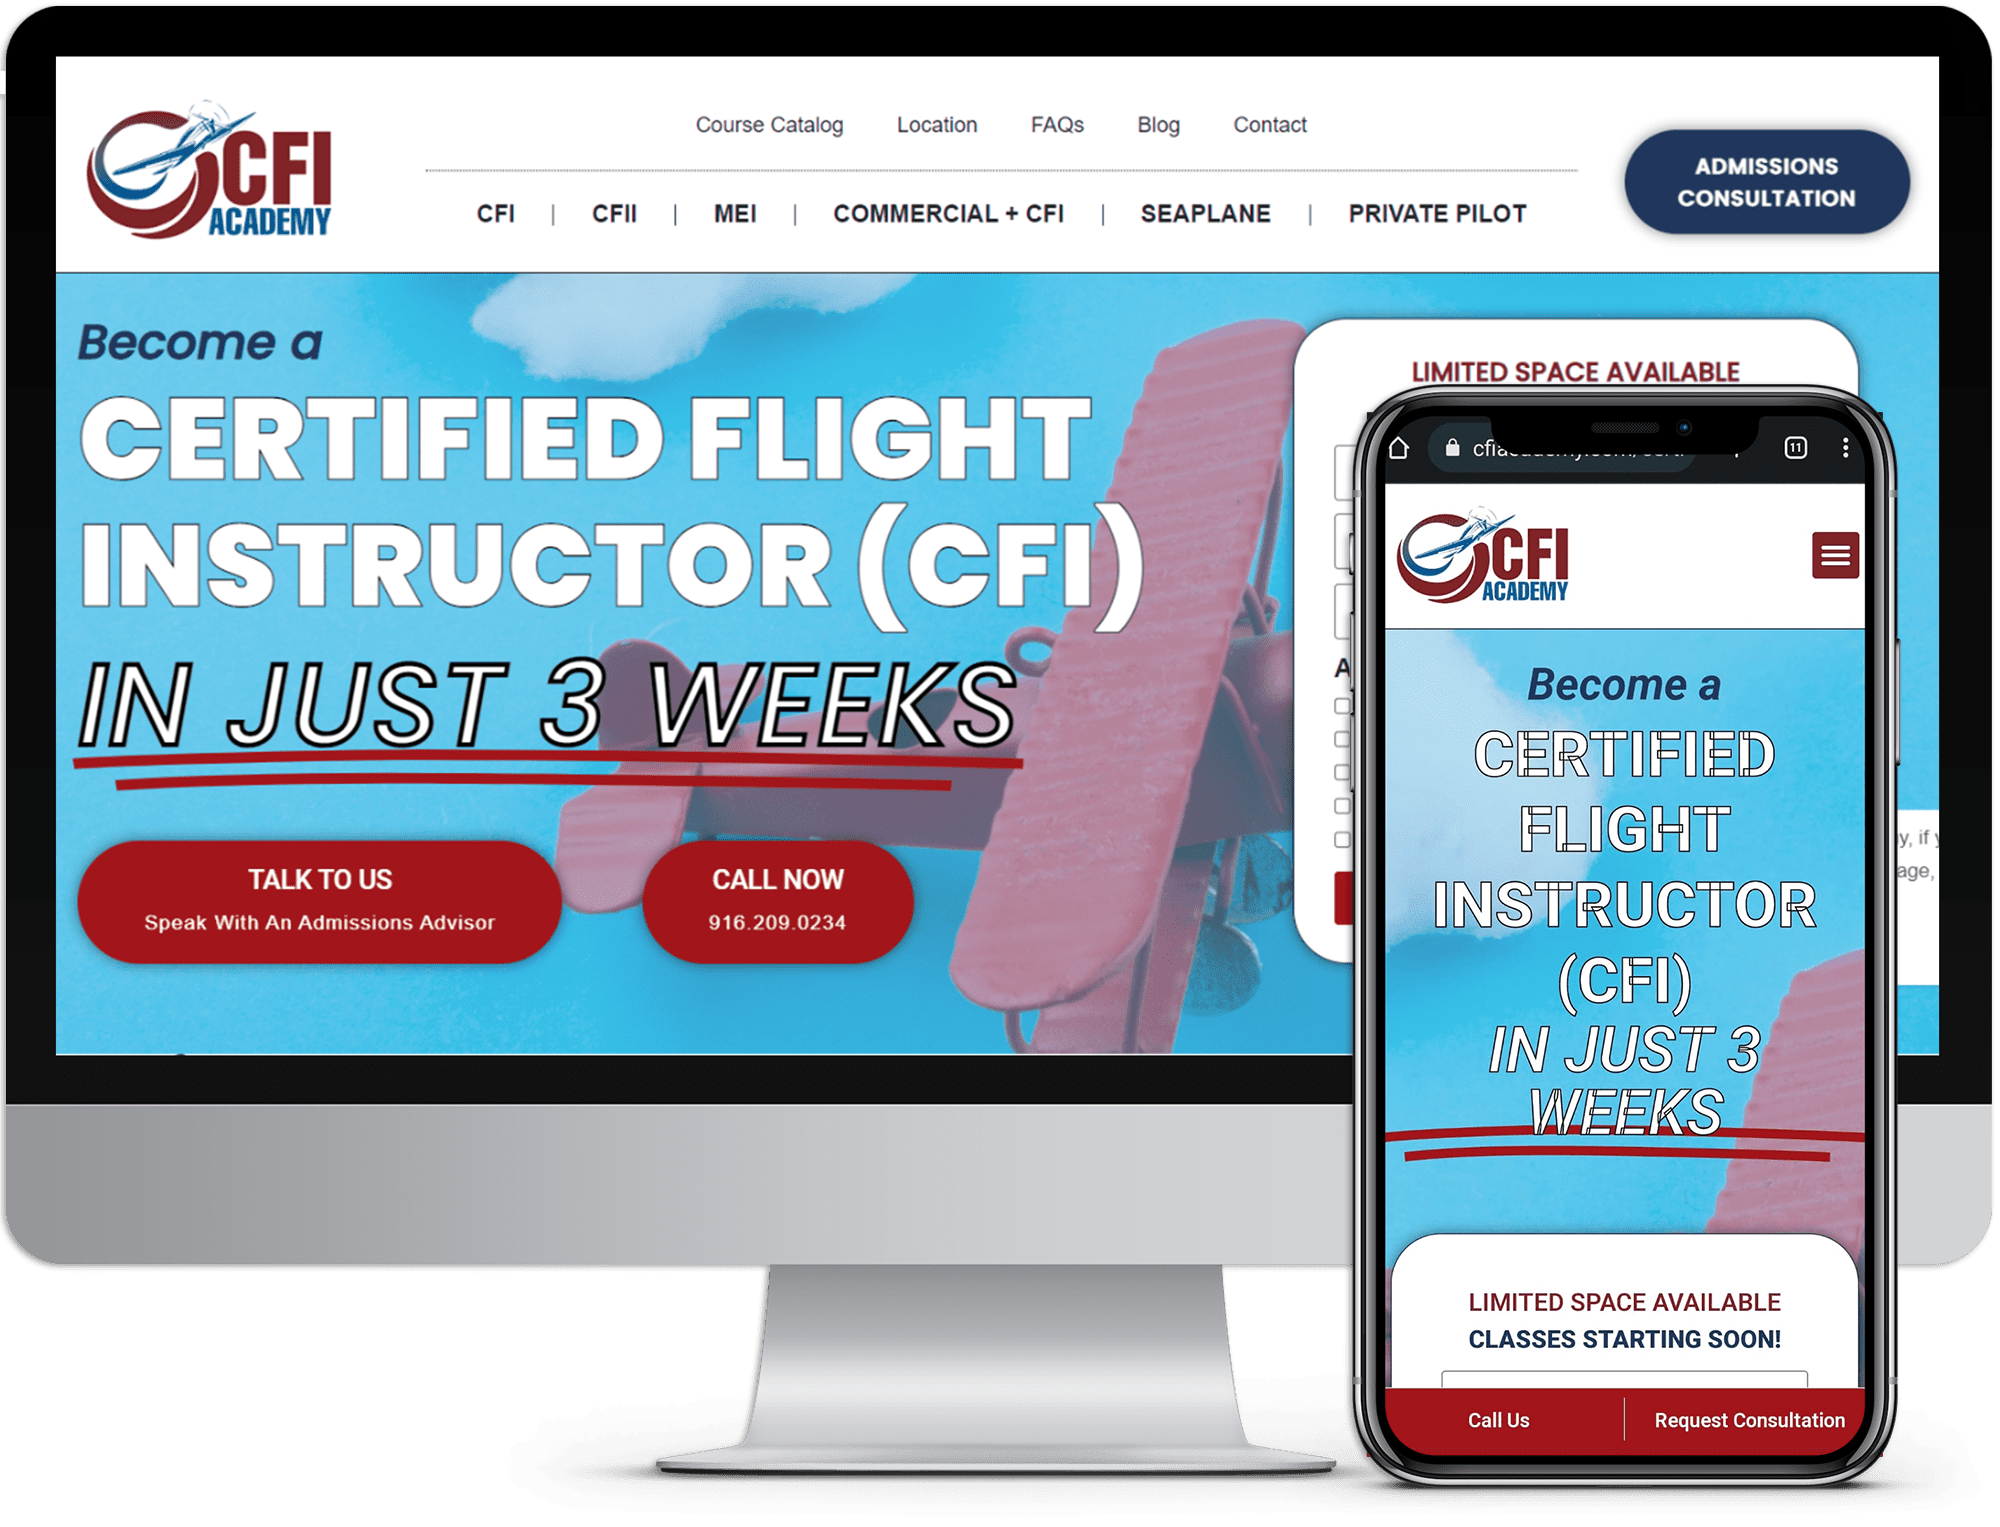 CFI Academy website design desktop & mobile view showcased in our portfolio